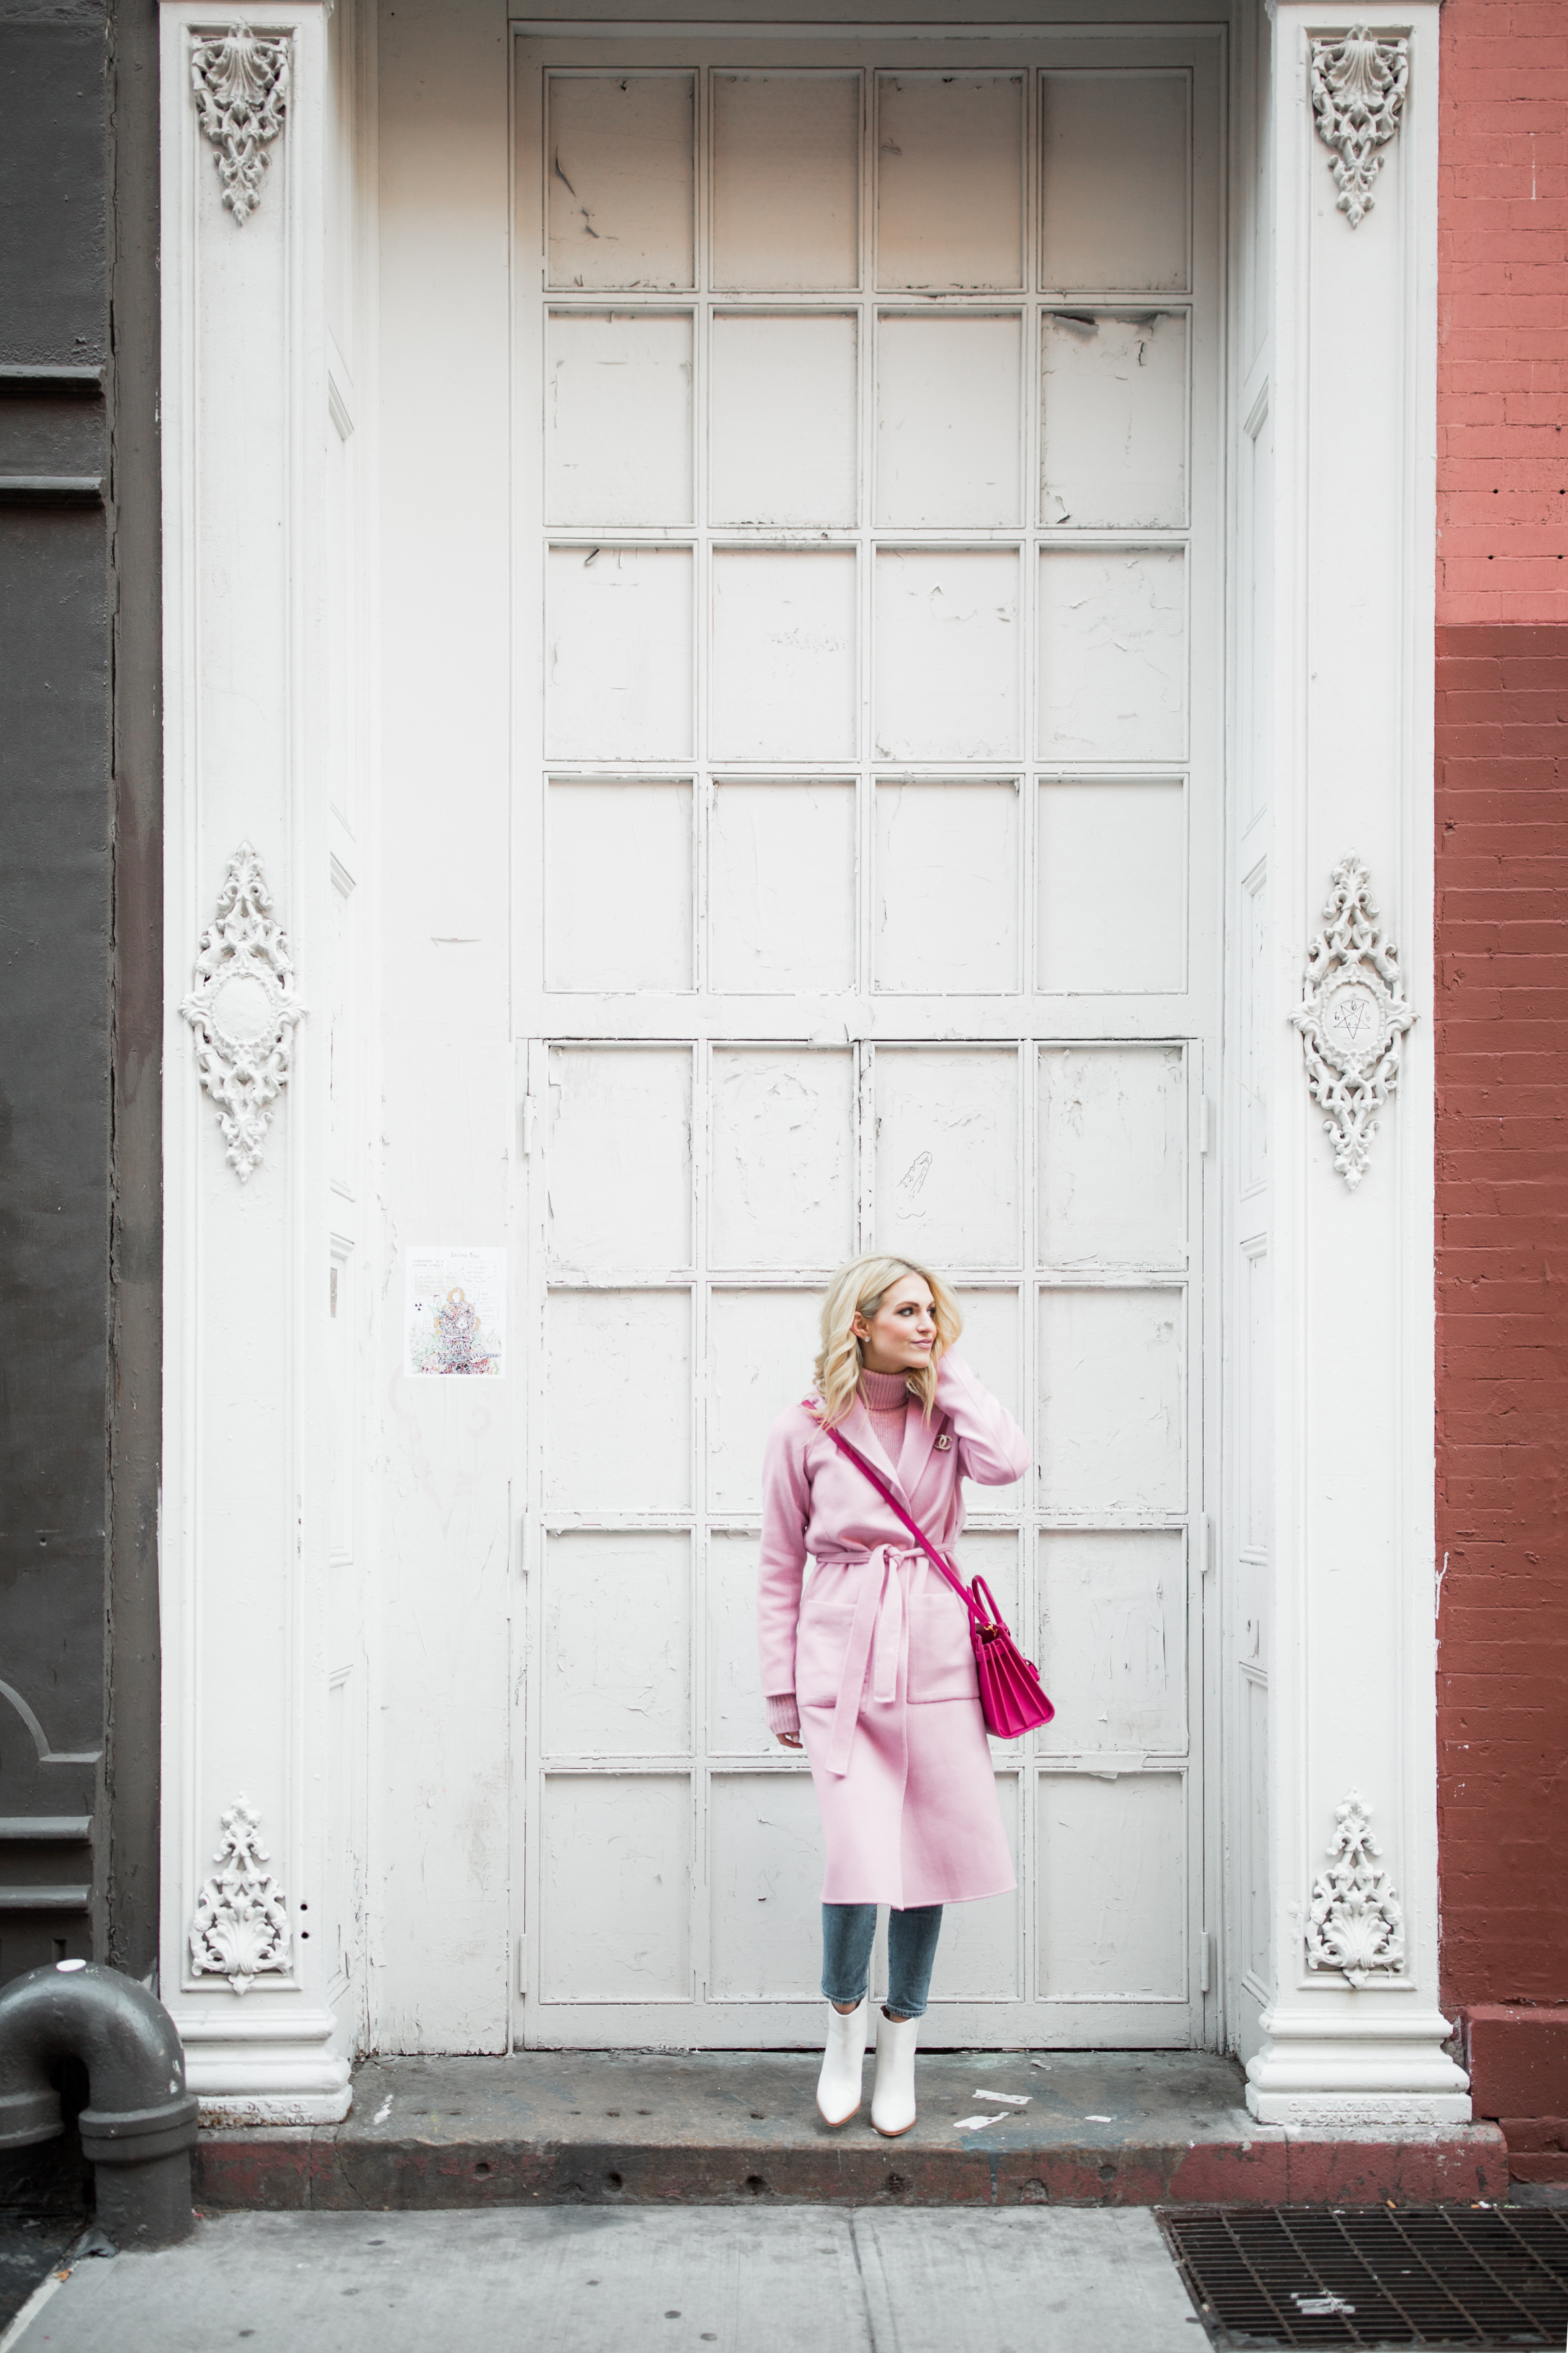  images by feliciathephotographer.com | new york city | fashion influencer photographer | headshots | eye wear | street style | pink | katey mcfarlan | blogger | chronicles of frivolity | 